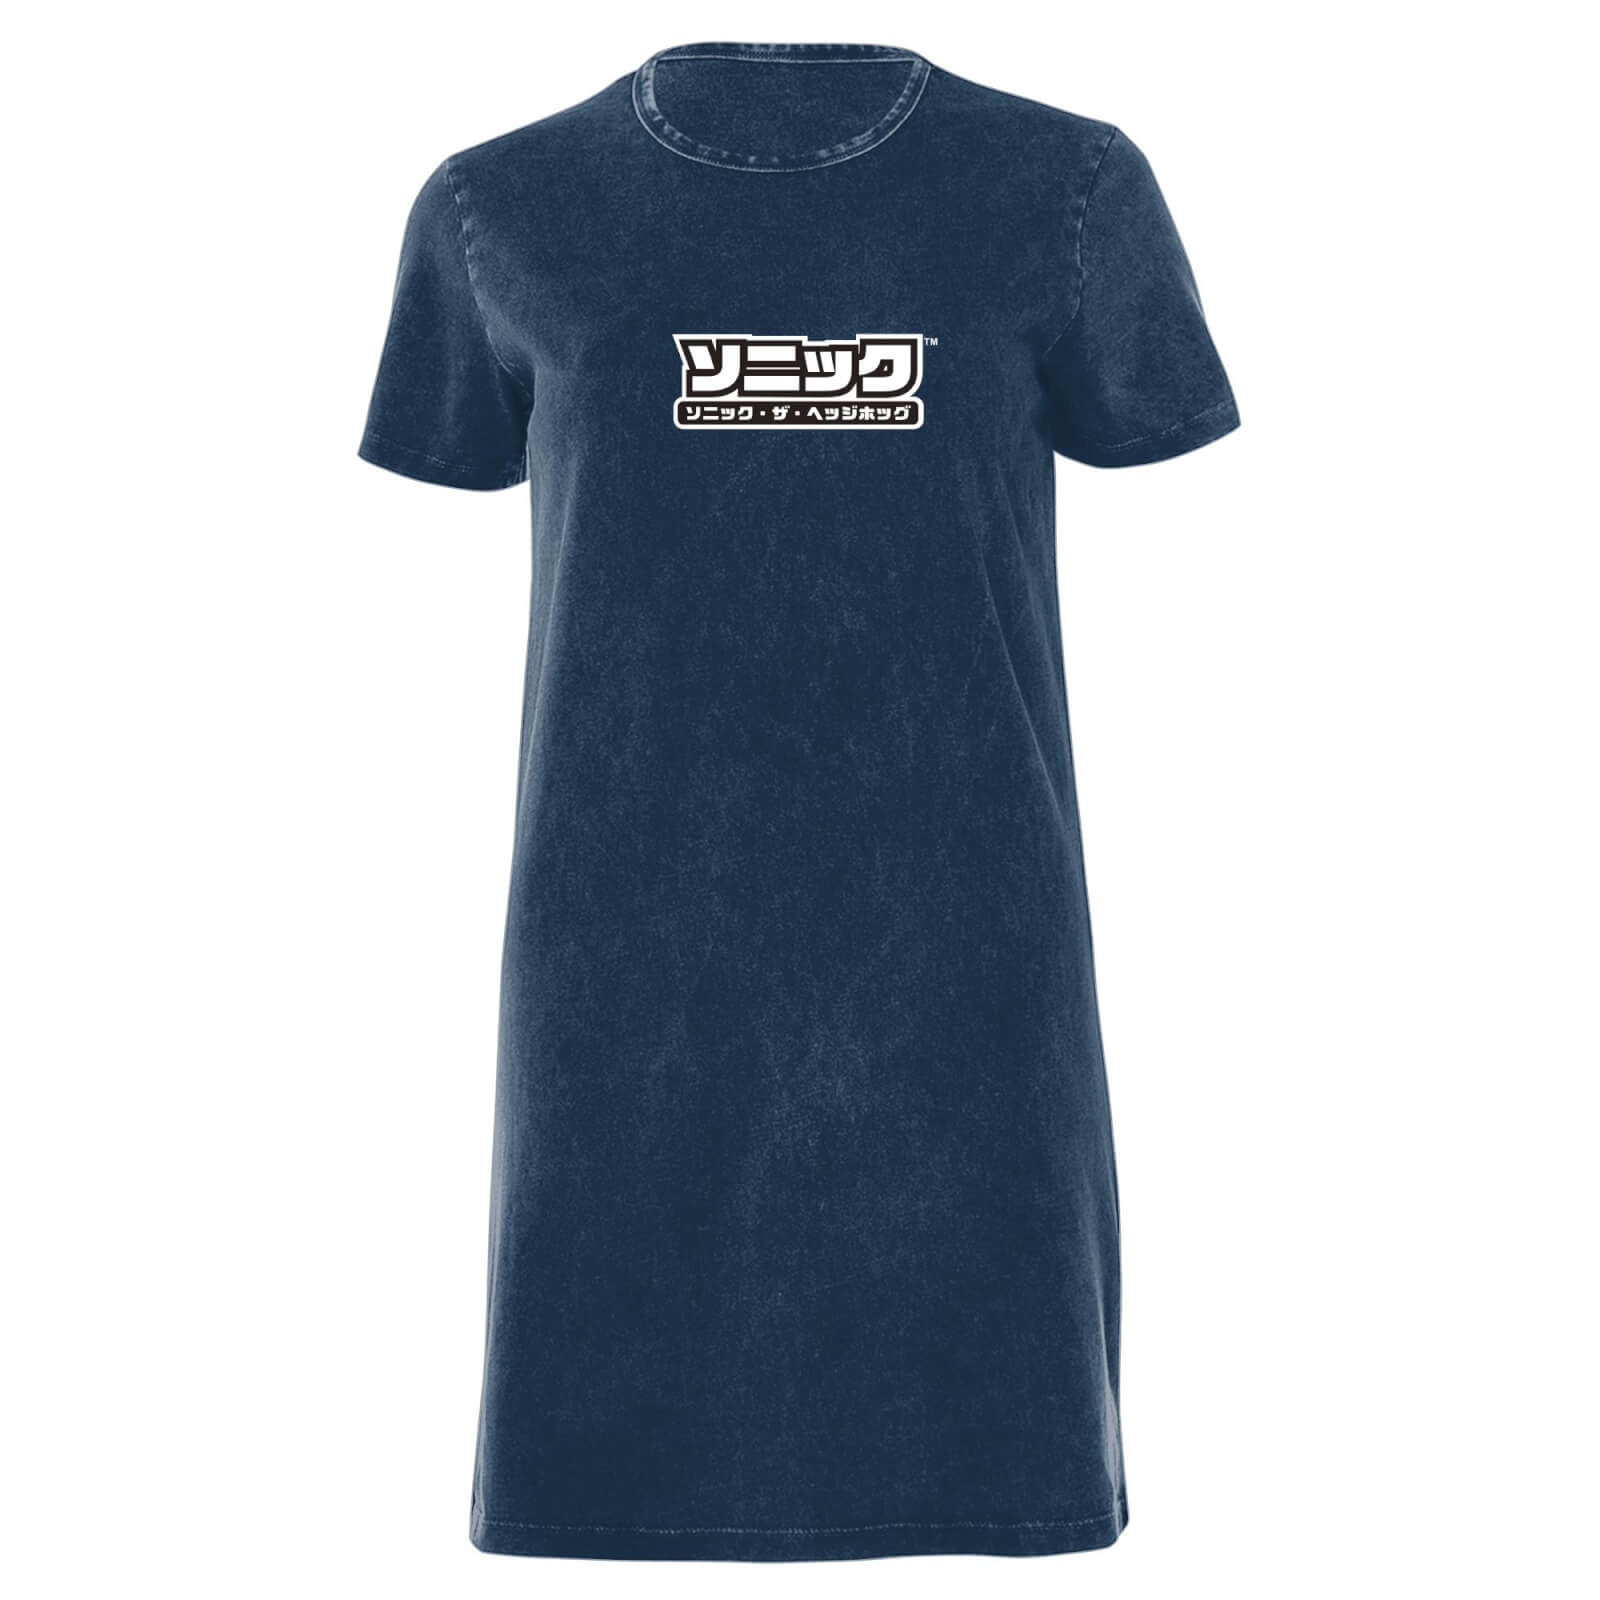 Sega Start Screen Women's T-Shirt Dress - Navy Acid Wash - XS - Navy Acid Wash